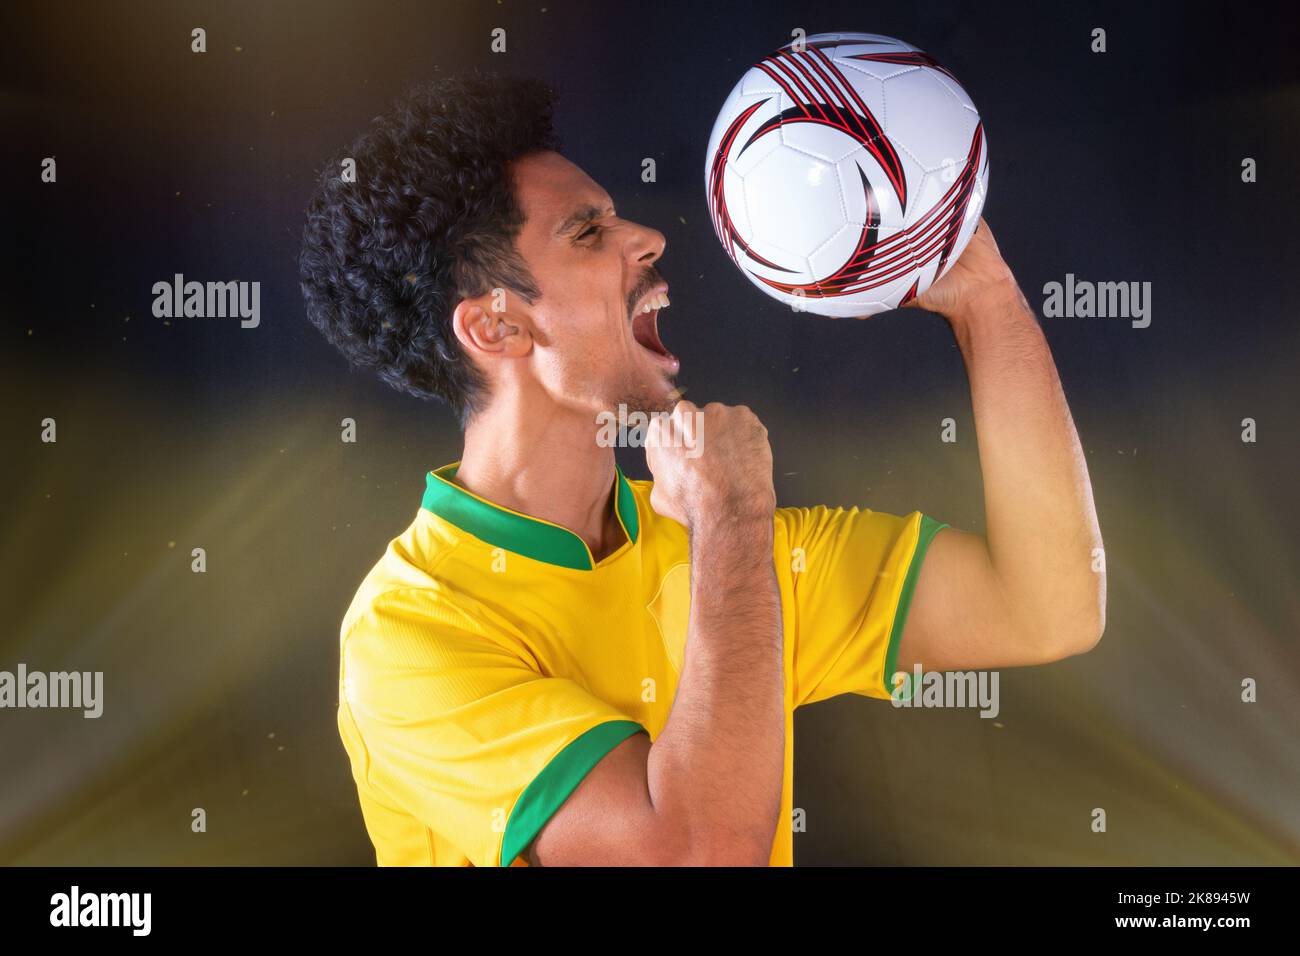 Brazilian Football Black Player Holding Ball and Celebrating, Isolated on Black Background. Stock Photo